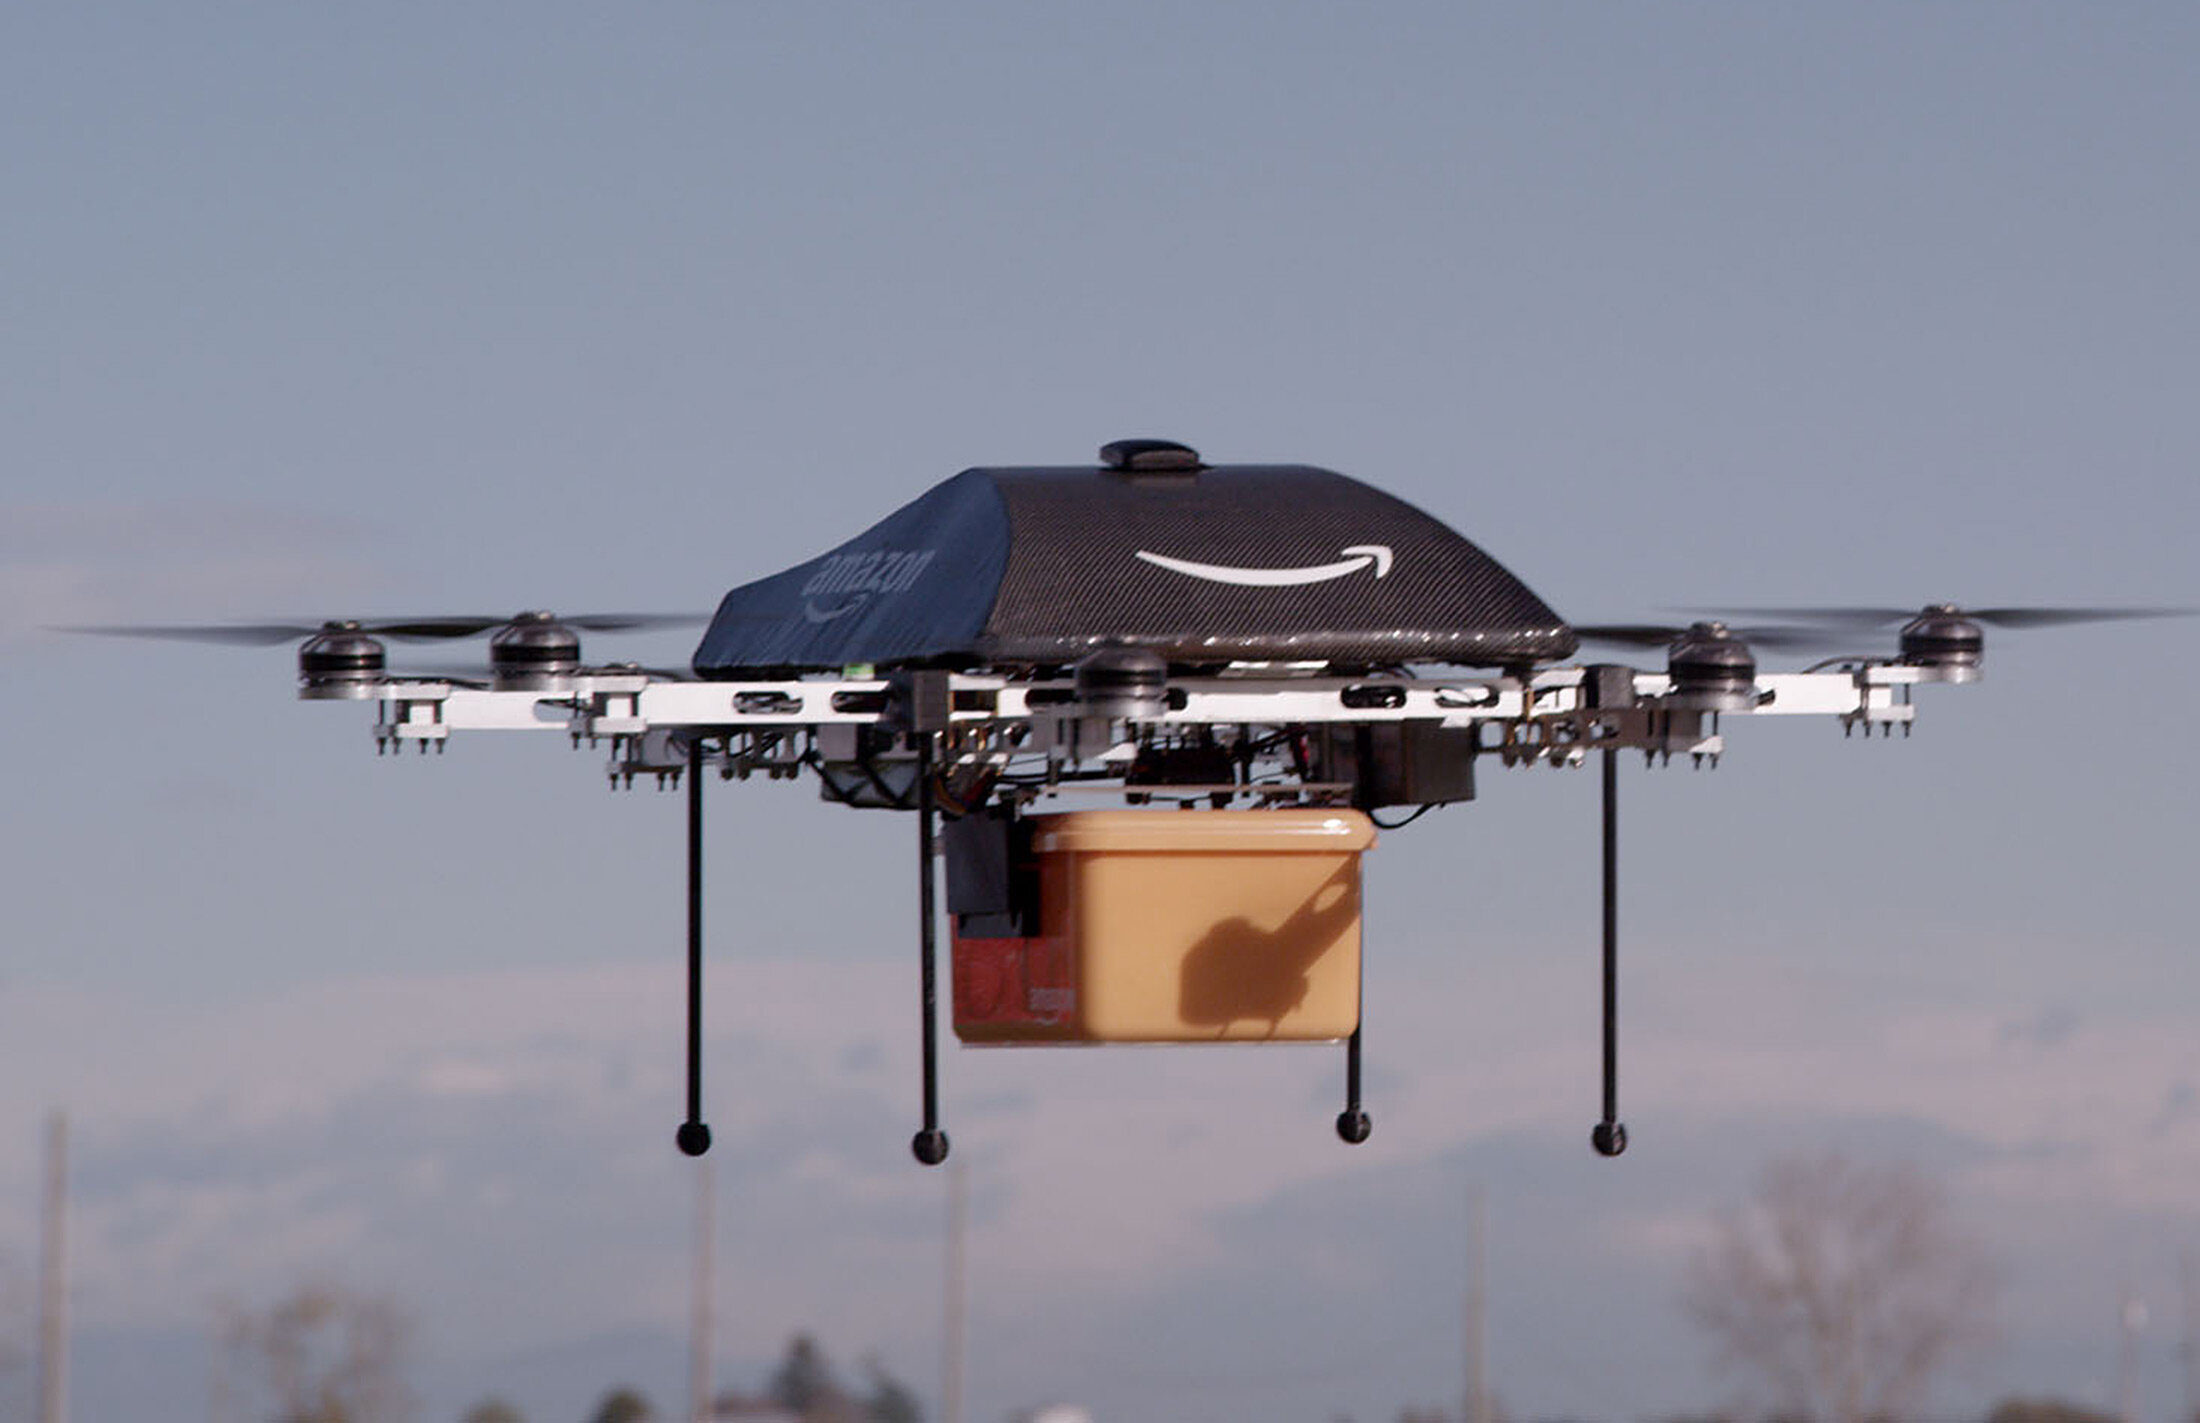 More information about "Νέο τοπίο στις ταχυμεταφορές: Άδεια για παραδόσεις δεμάτων με drone έλαβε η Amazon από την FAA"